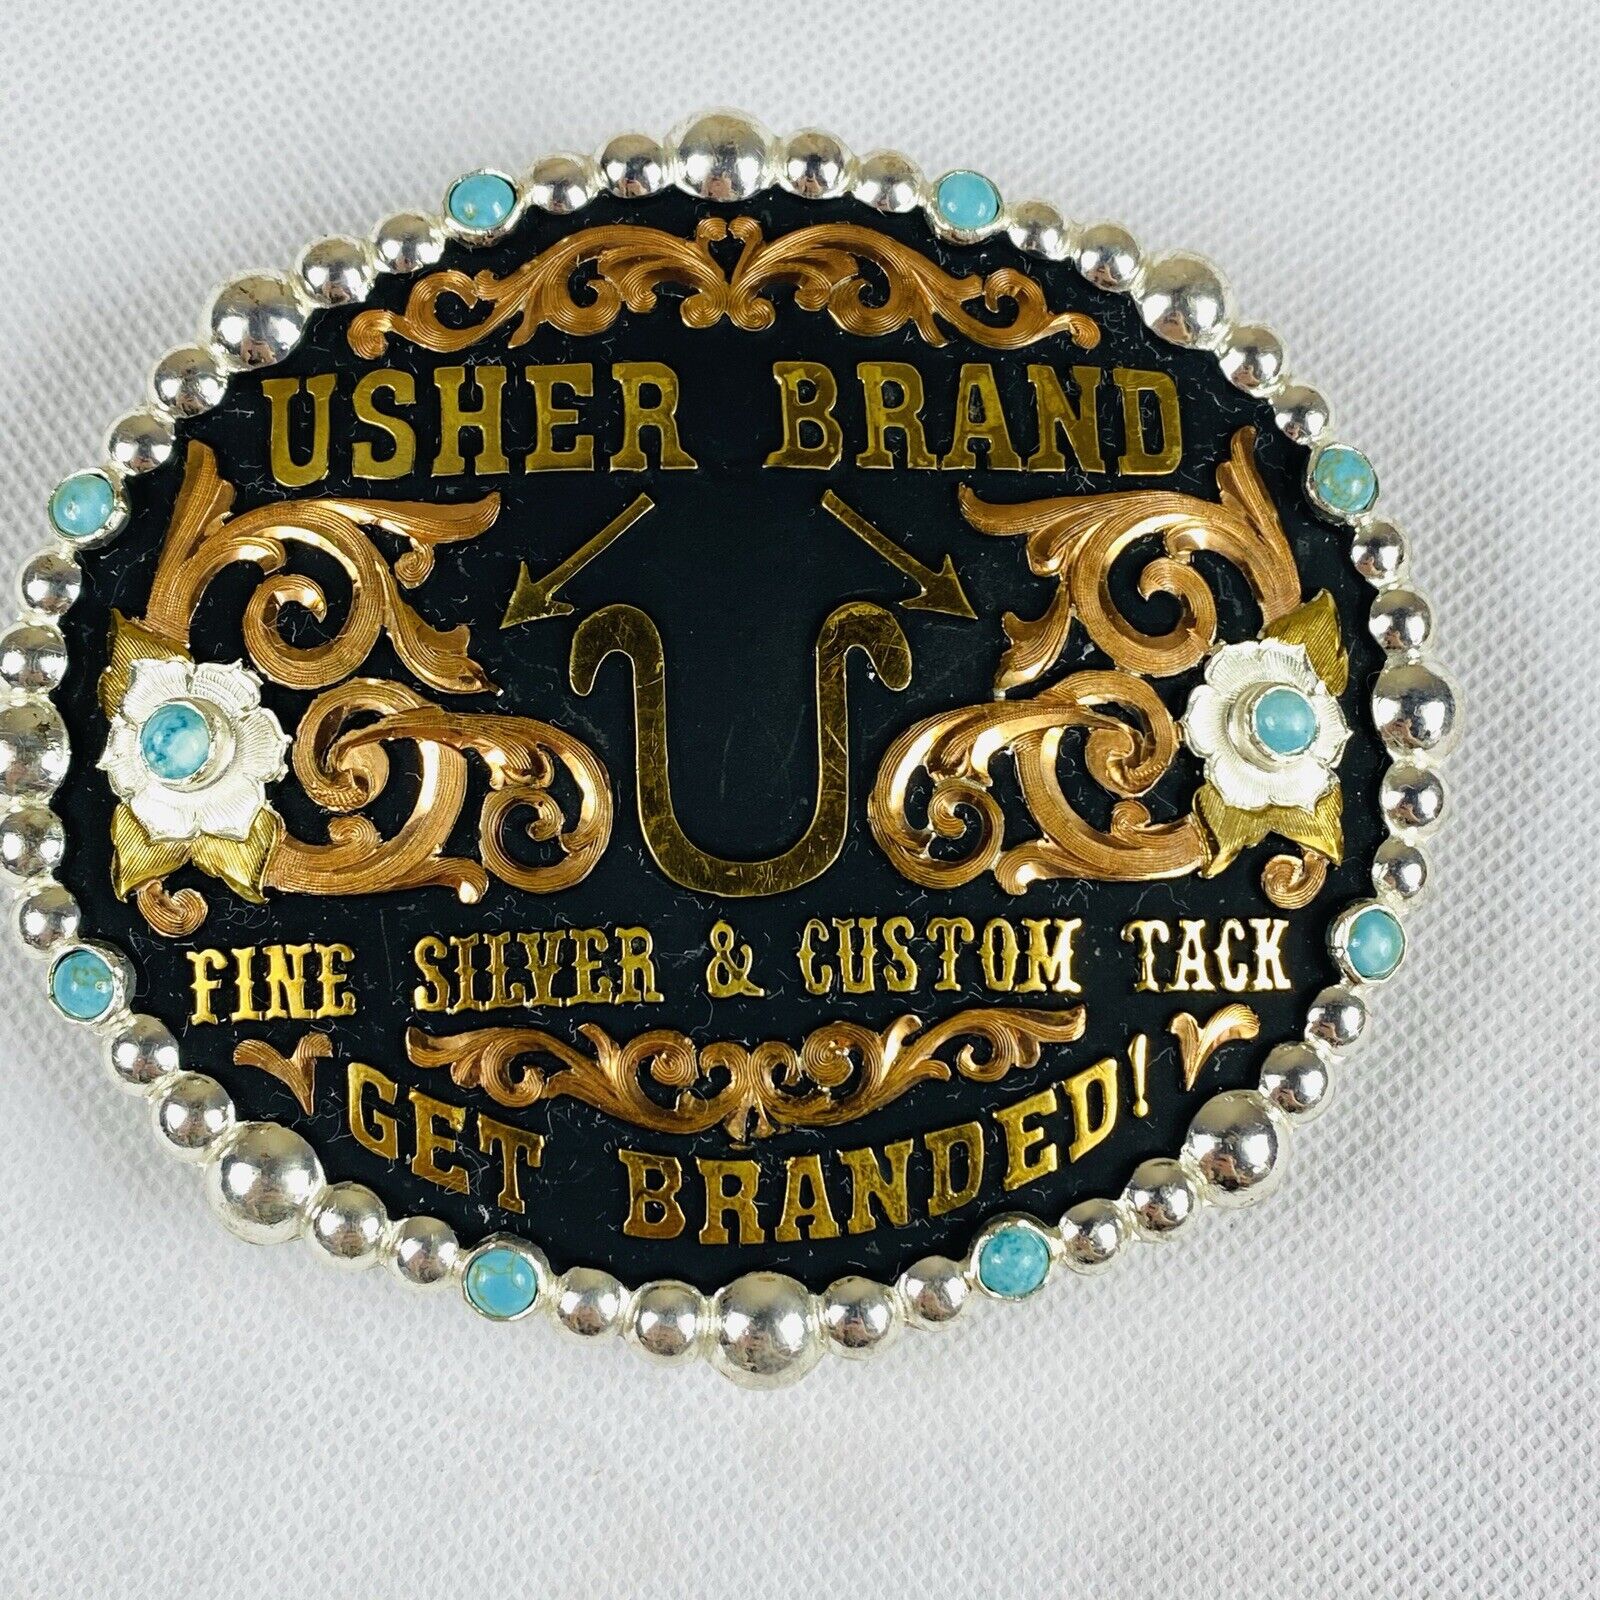 Usher Brand Promo Cowboy Western Rodeo Championship Style Belt Buckle